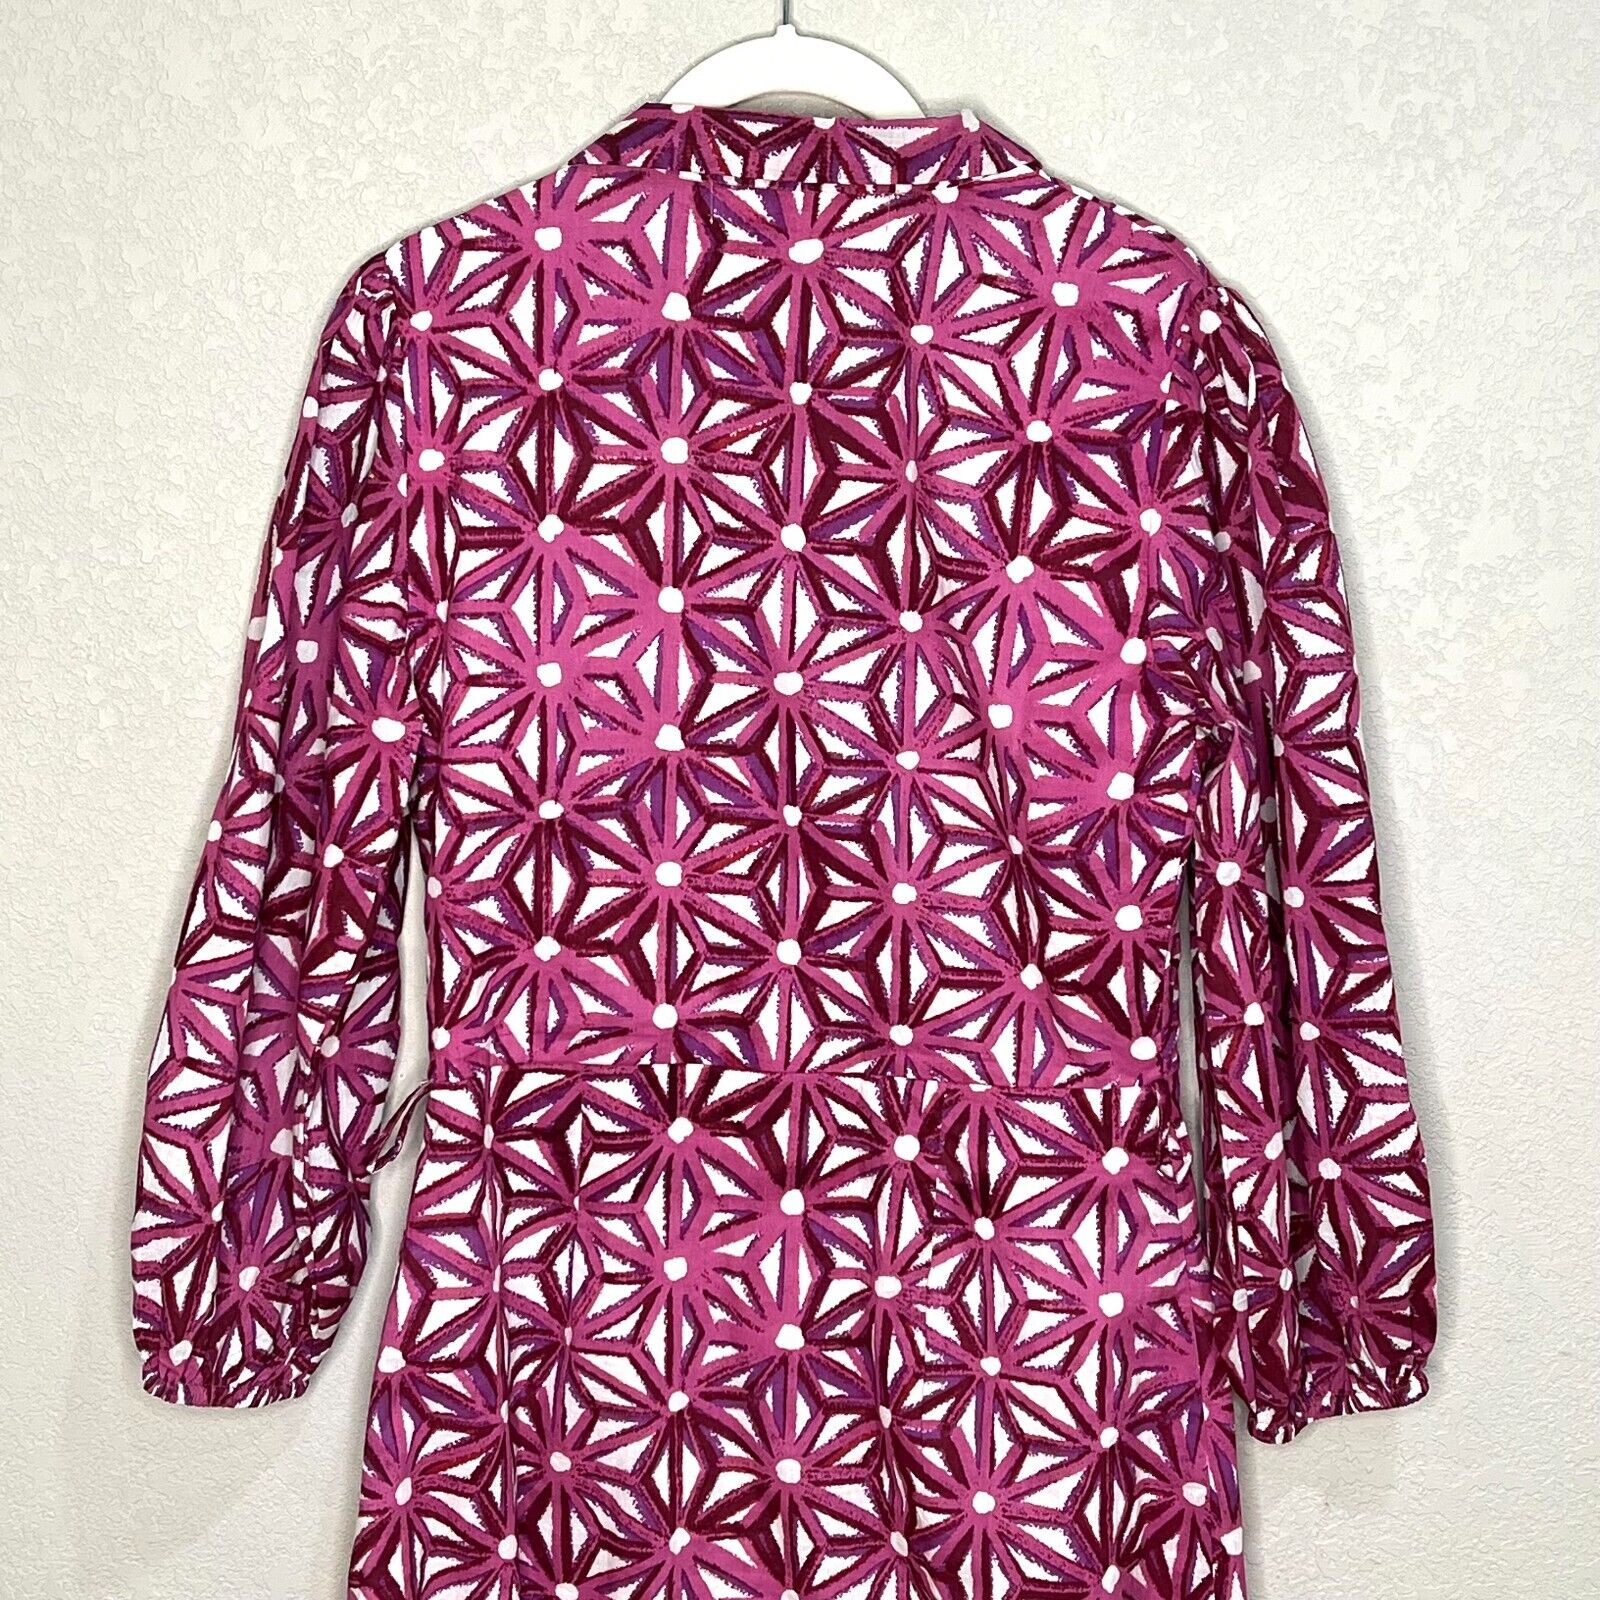 Ro's Garden Maxima Shirt Dress in Purple Petra Size Small